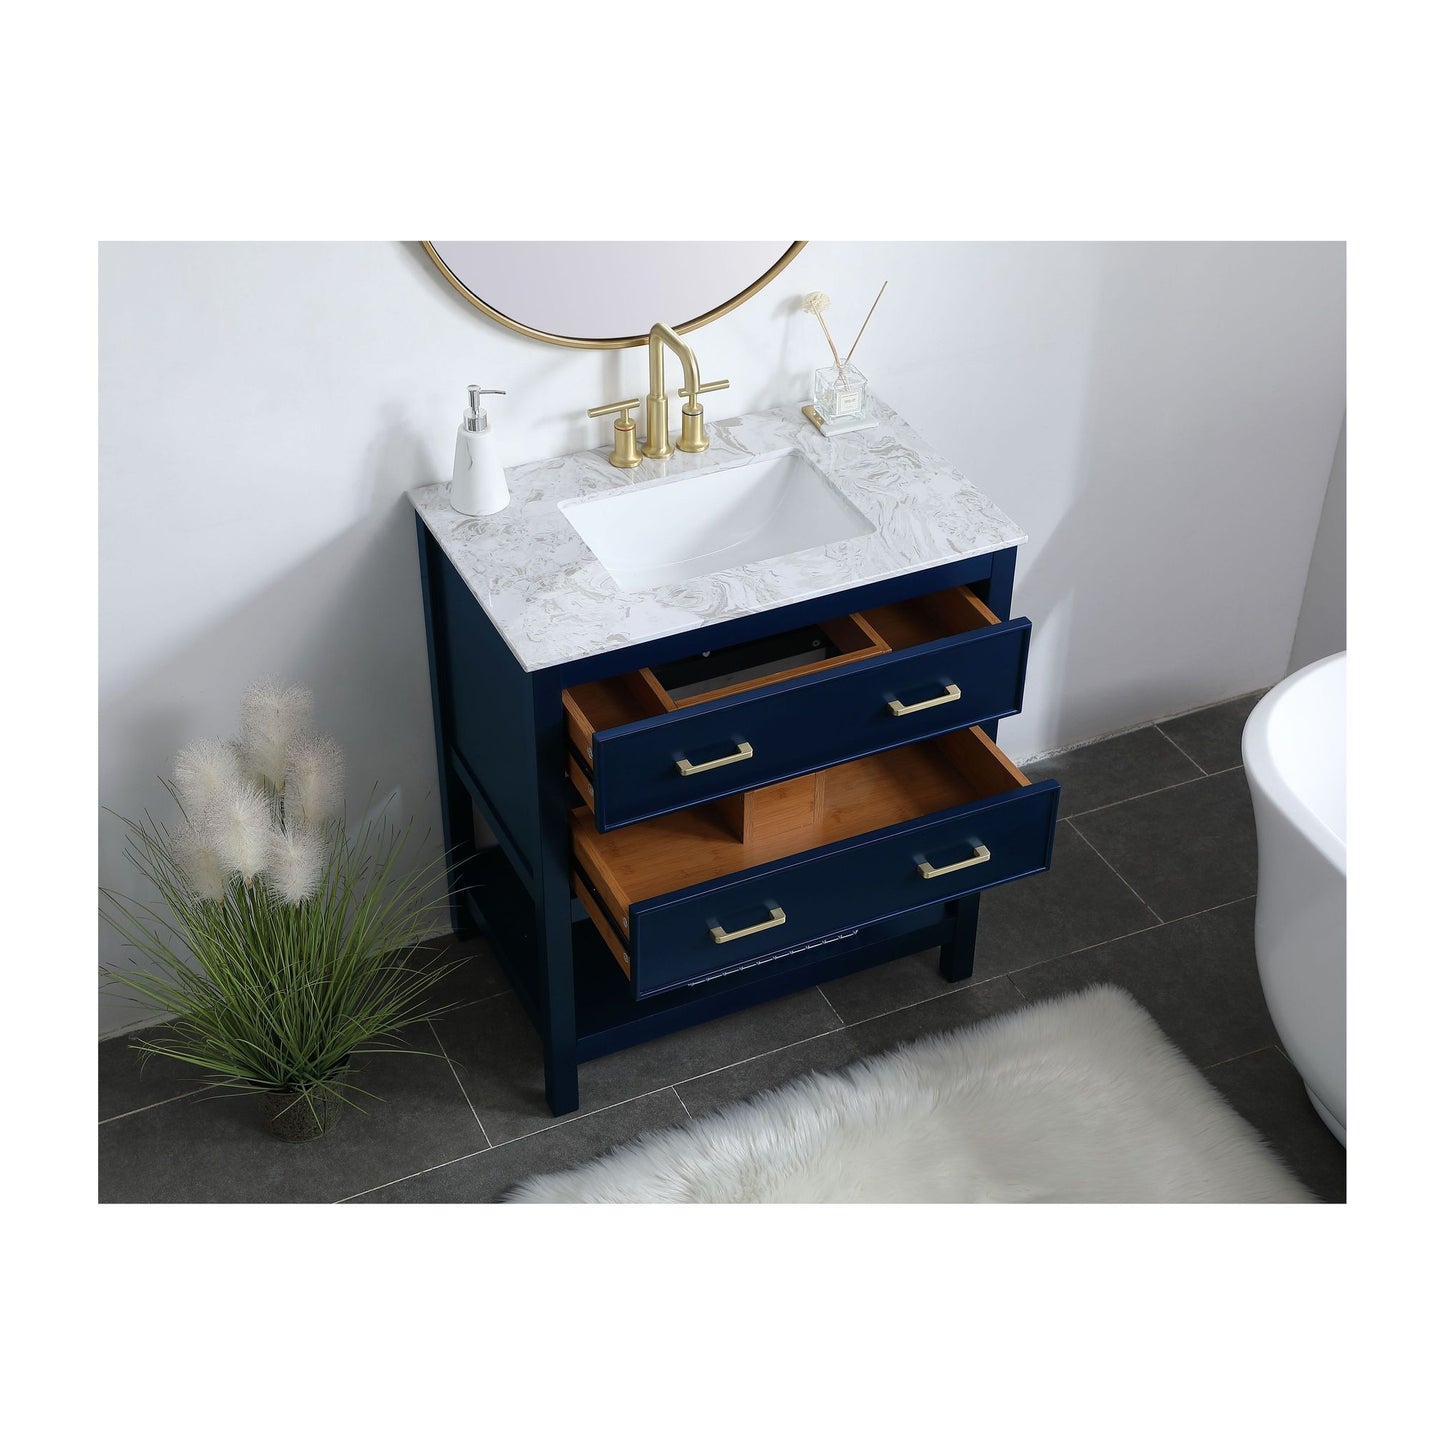 VF90130BL 30" Single Bathroom Vanity in Blue